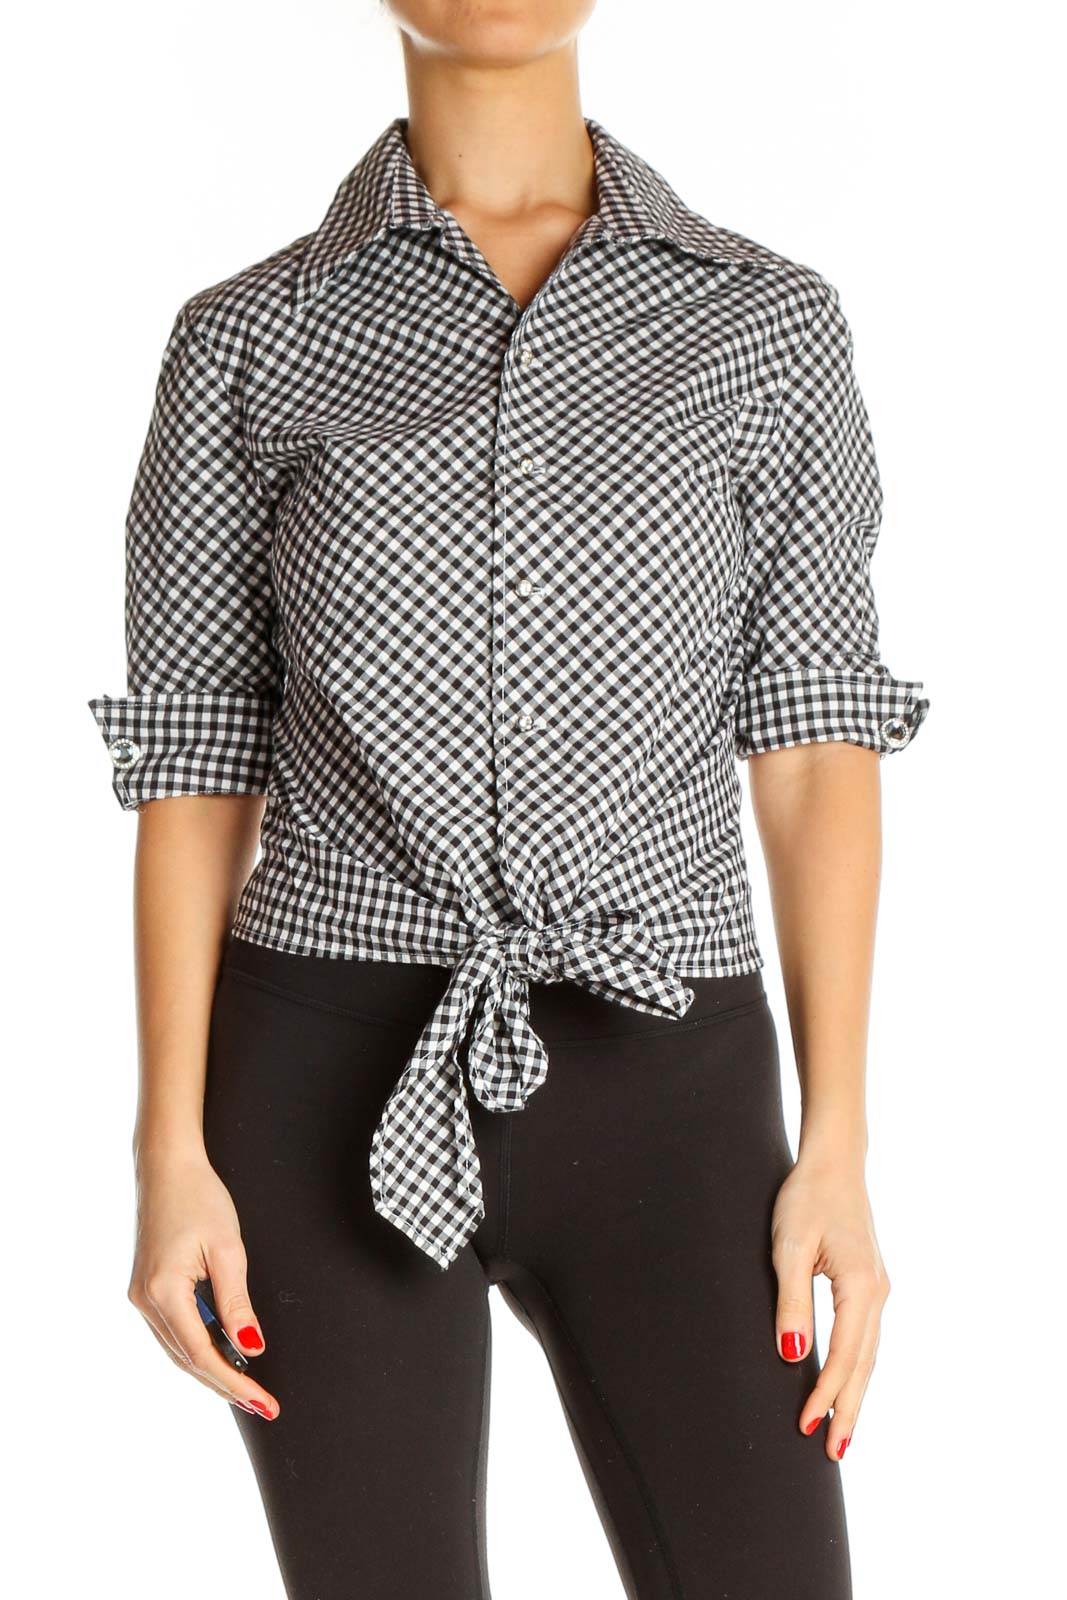 Gray Checkered Formal Shirt Front